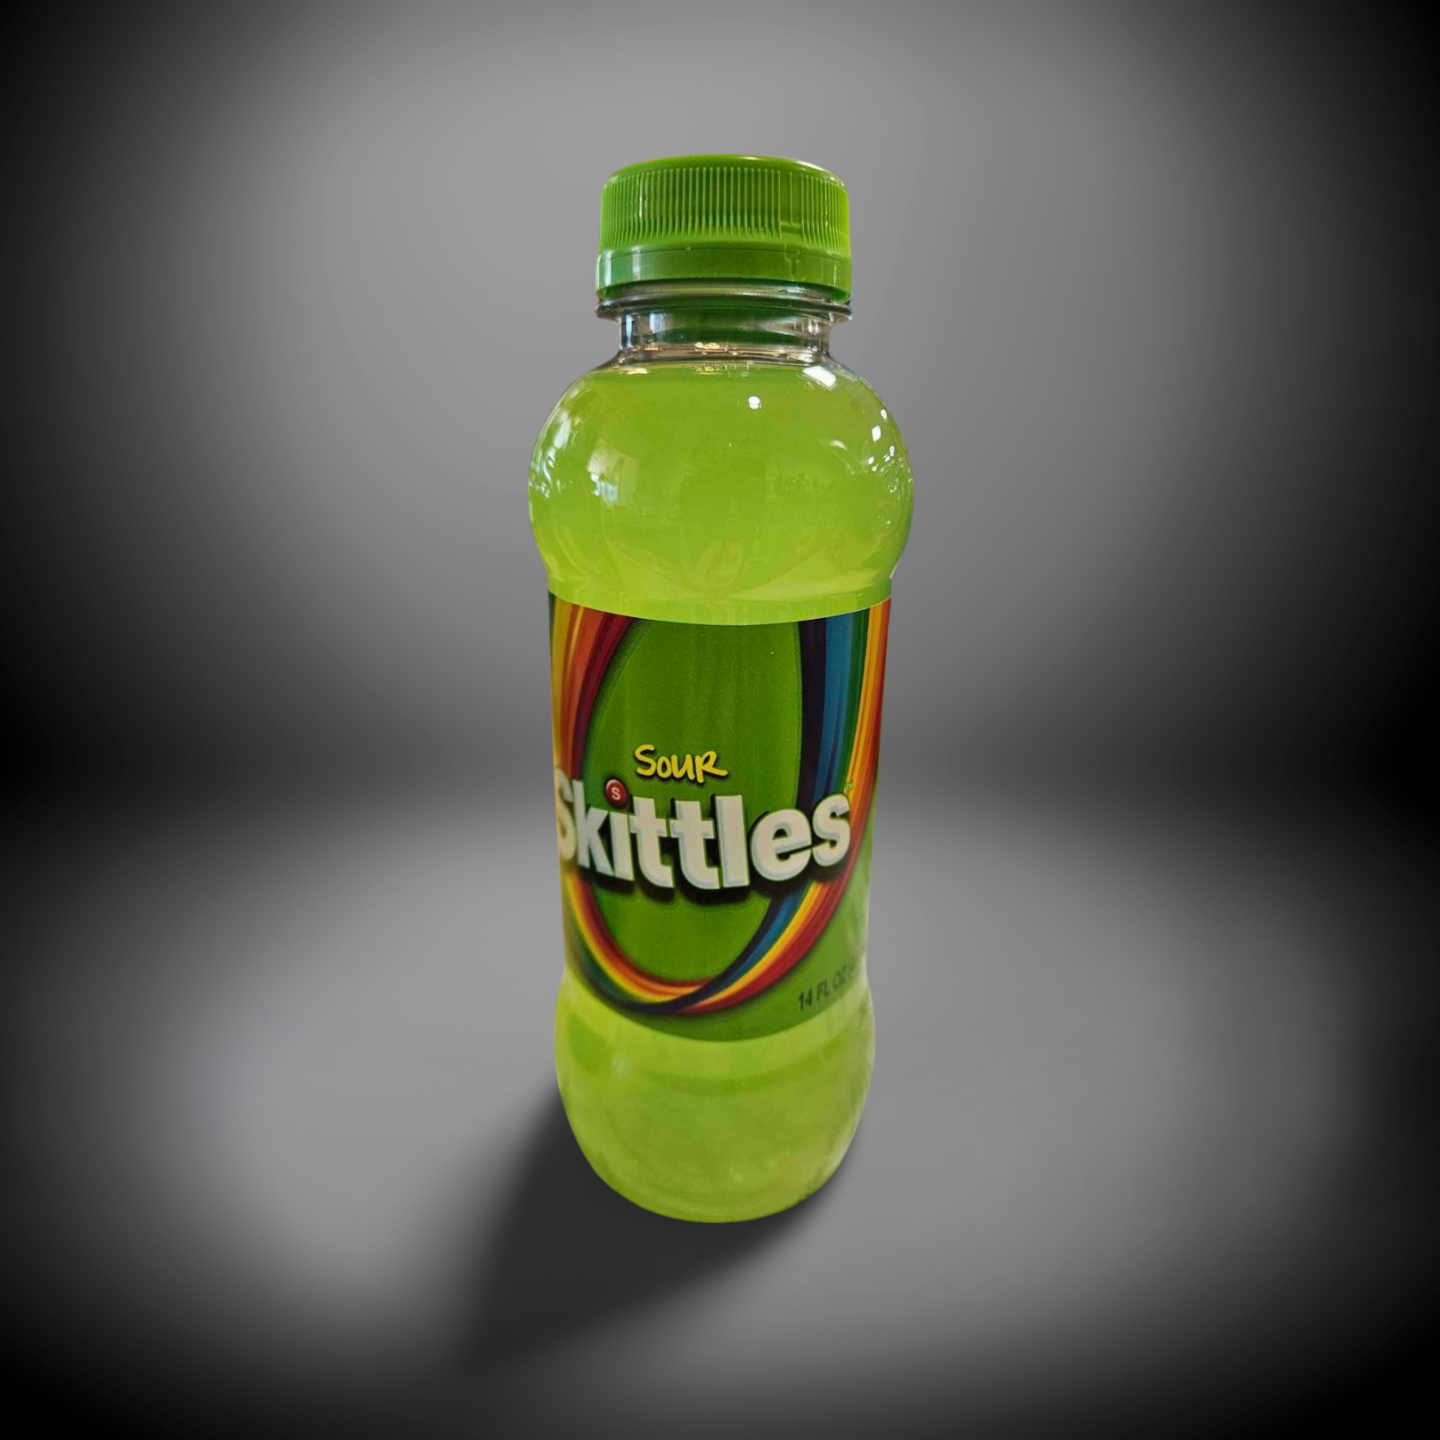 Skittles Drinks - Taste the Rainbow - Dusty's Country Store